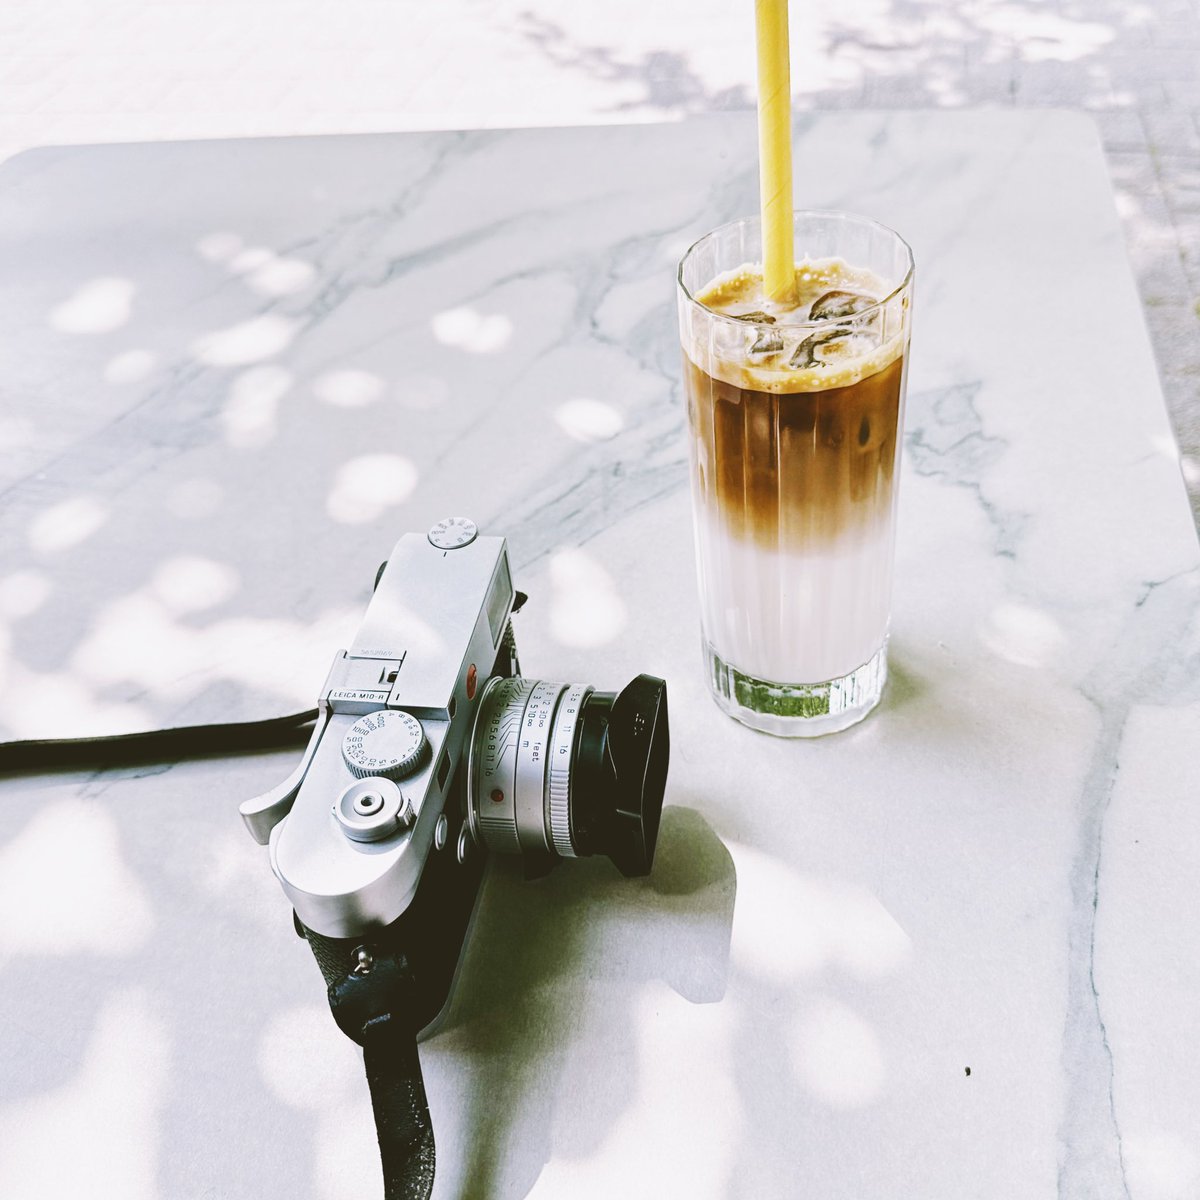 Caffè & Leica With Leica M10-R & 35mm Summicron & iced coffee as it’s getting warmer these days. #leica #leicam #leicam10 #leicam10r #coffee #cafe #caffe #caffè #summicron